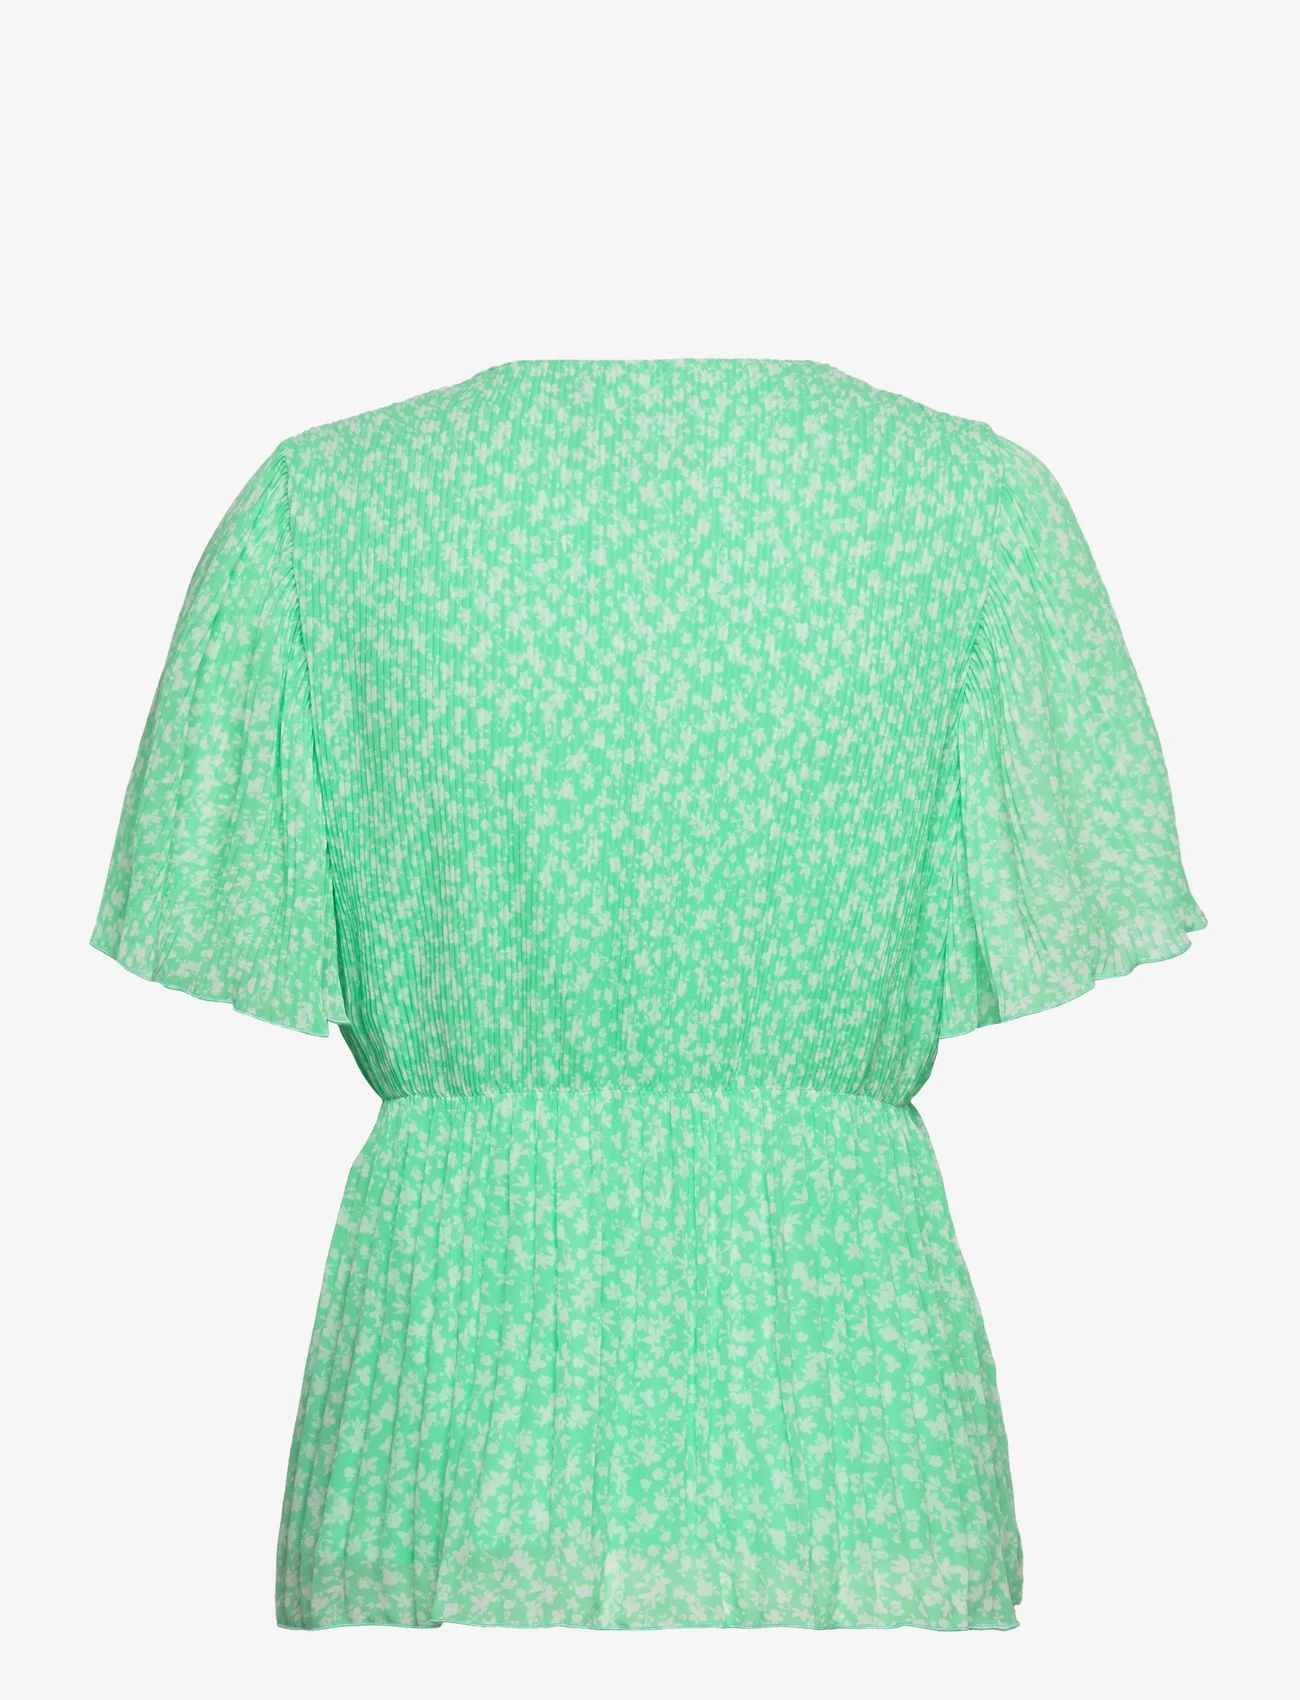 Cras - Bonniecras Blouse - short-sleeved blouses - flora mint - 1